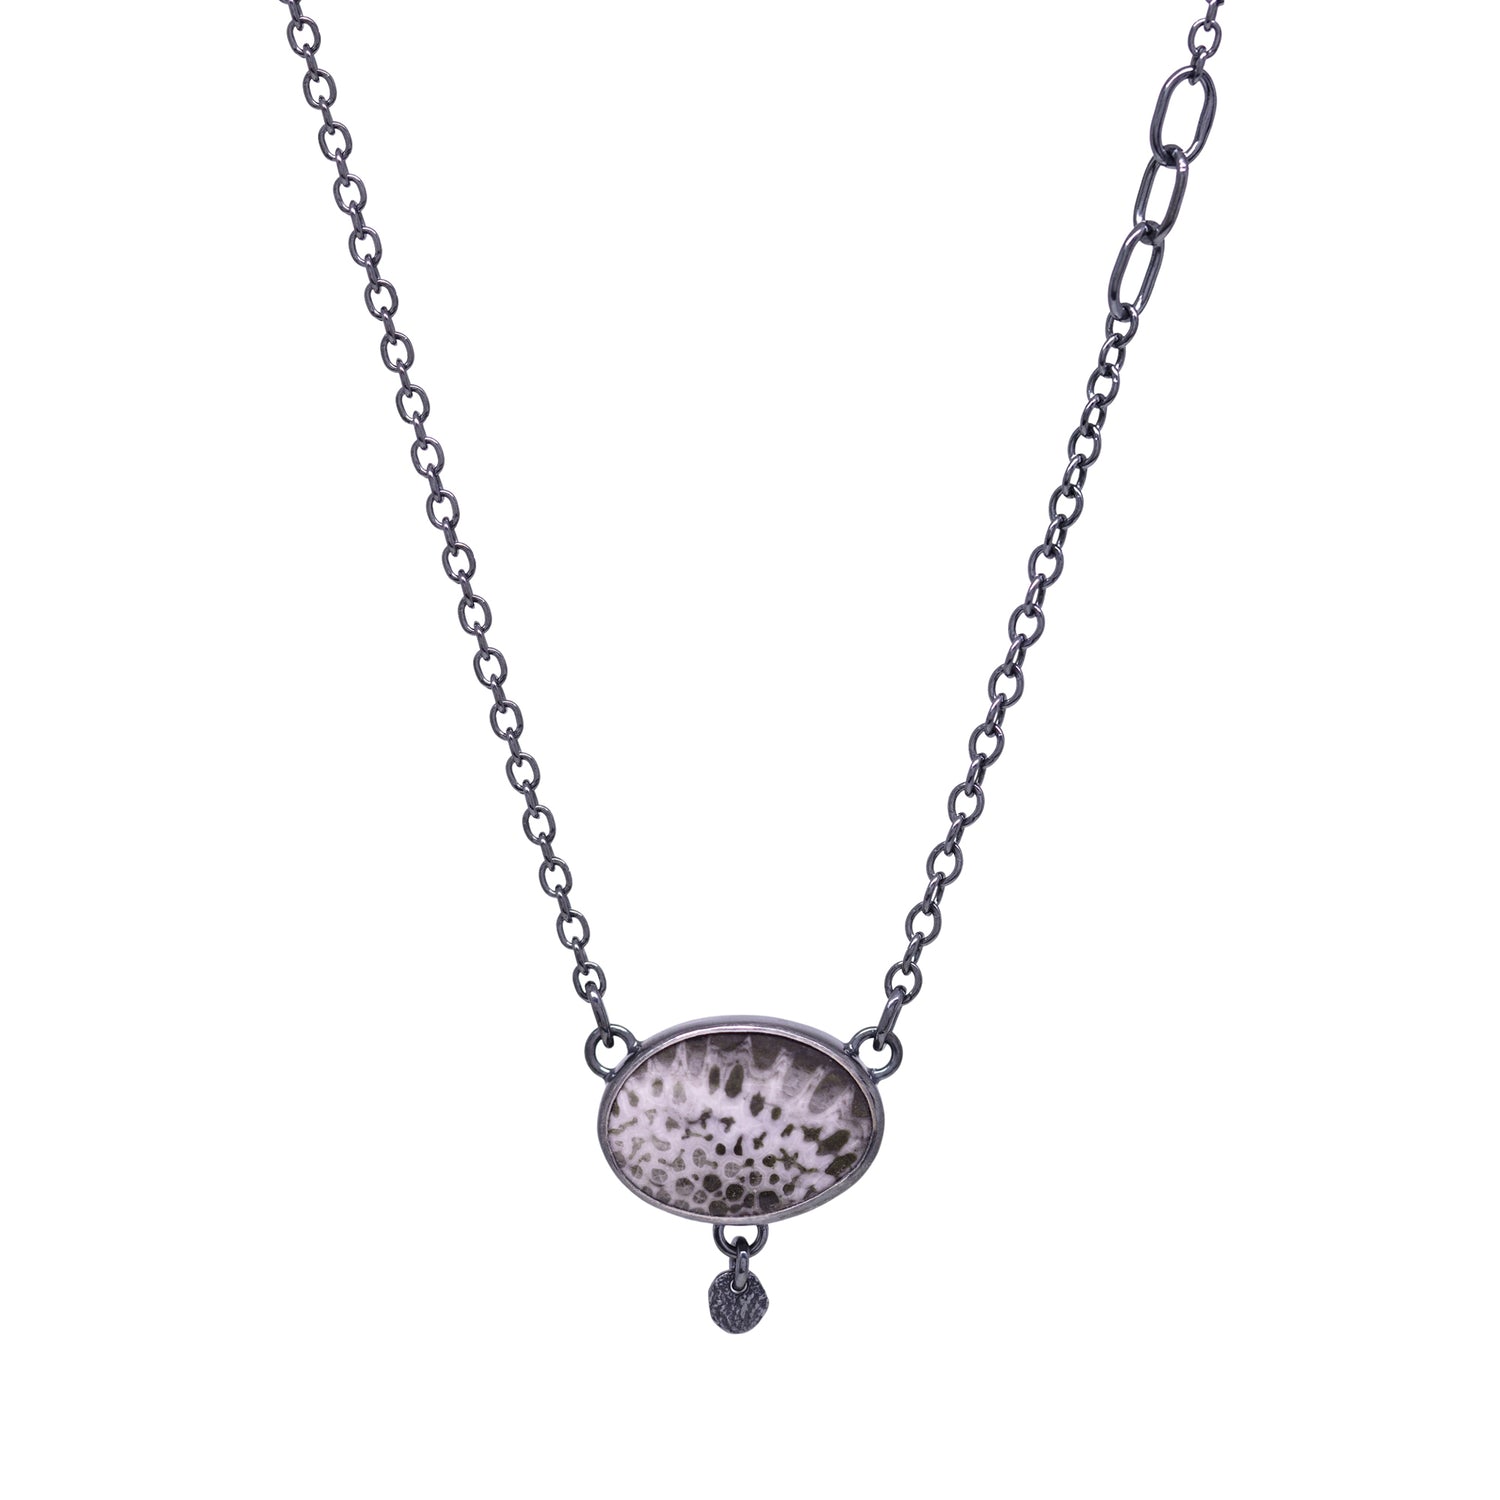 Balance Link Necklace - Black Fossilized Coral - Oval - Dark Sterling